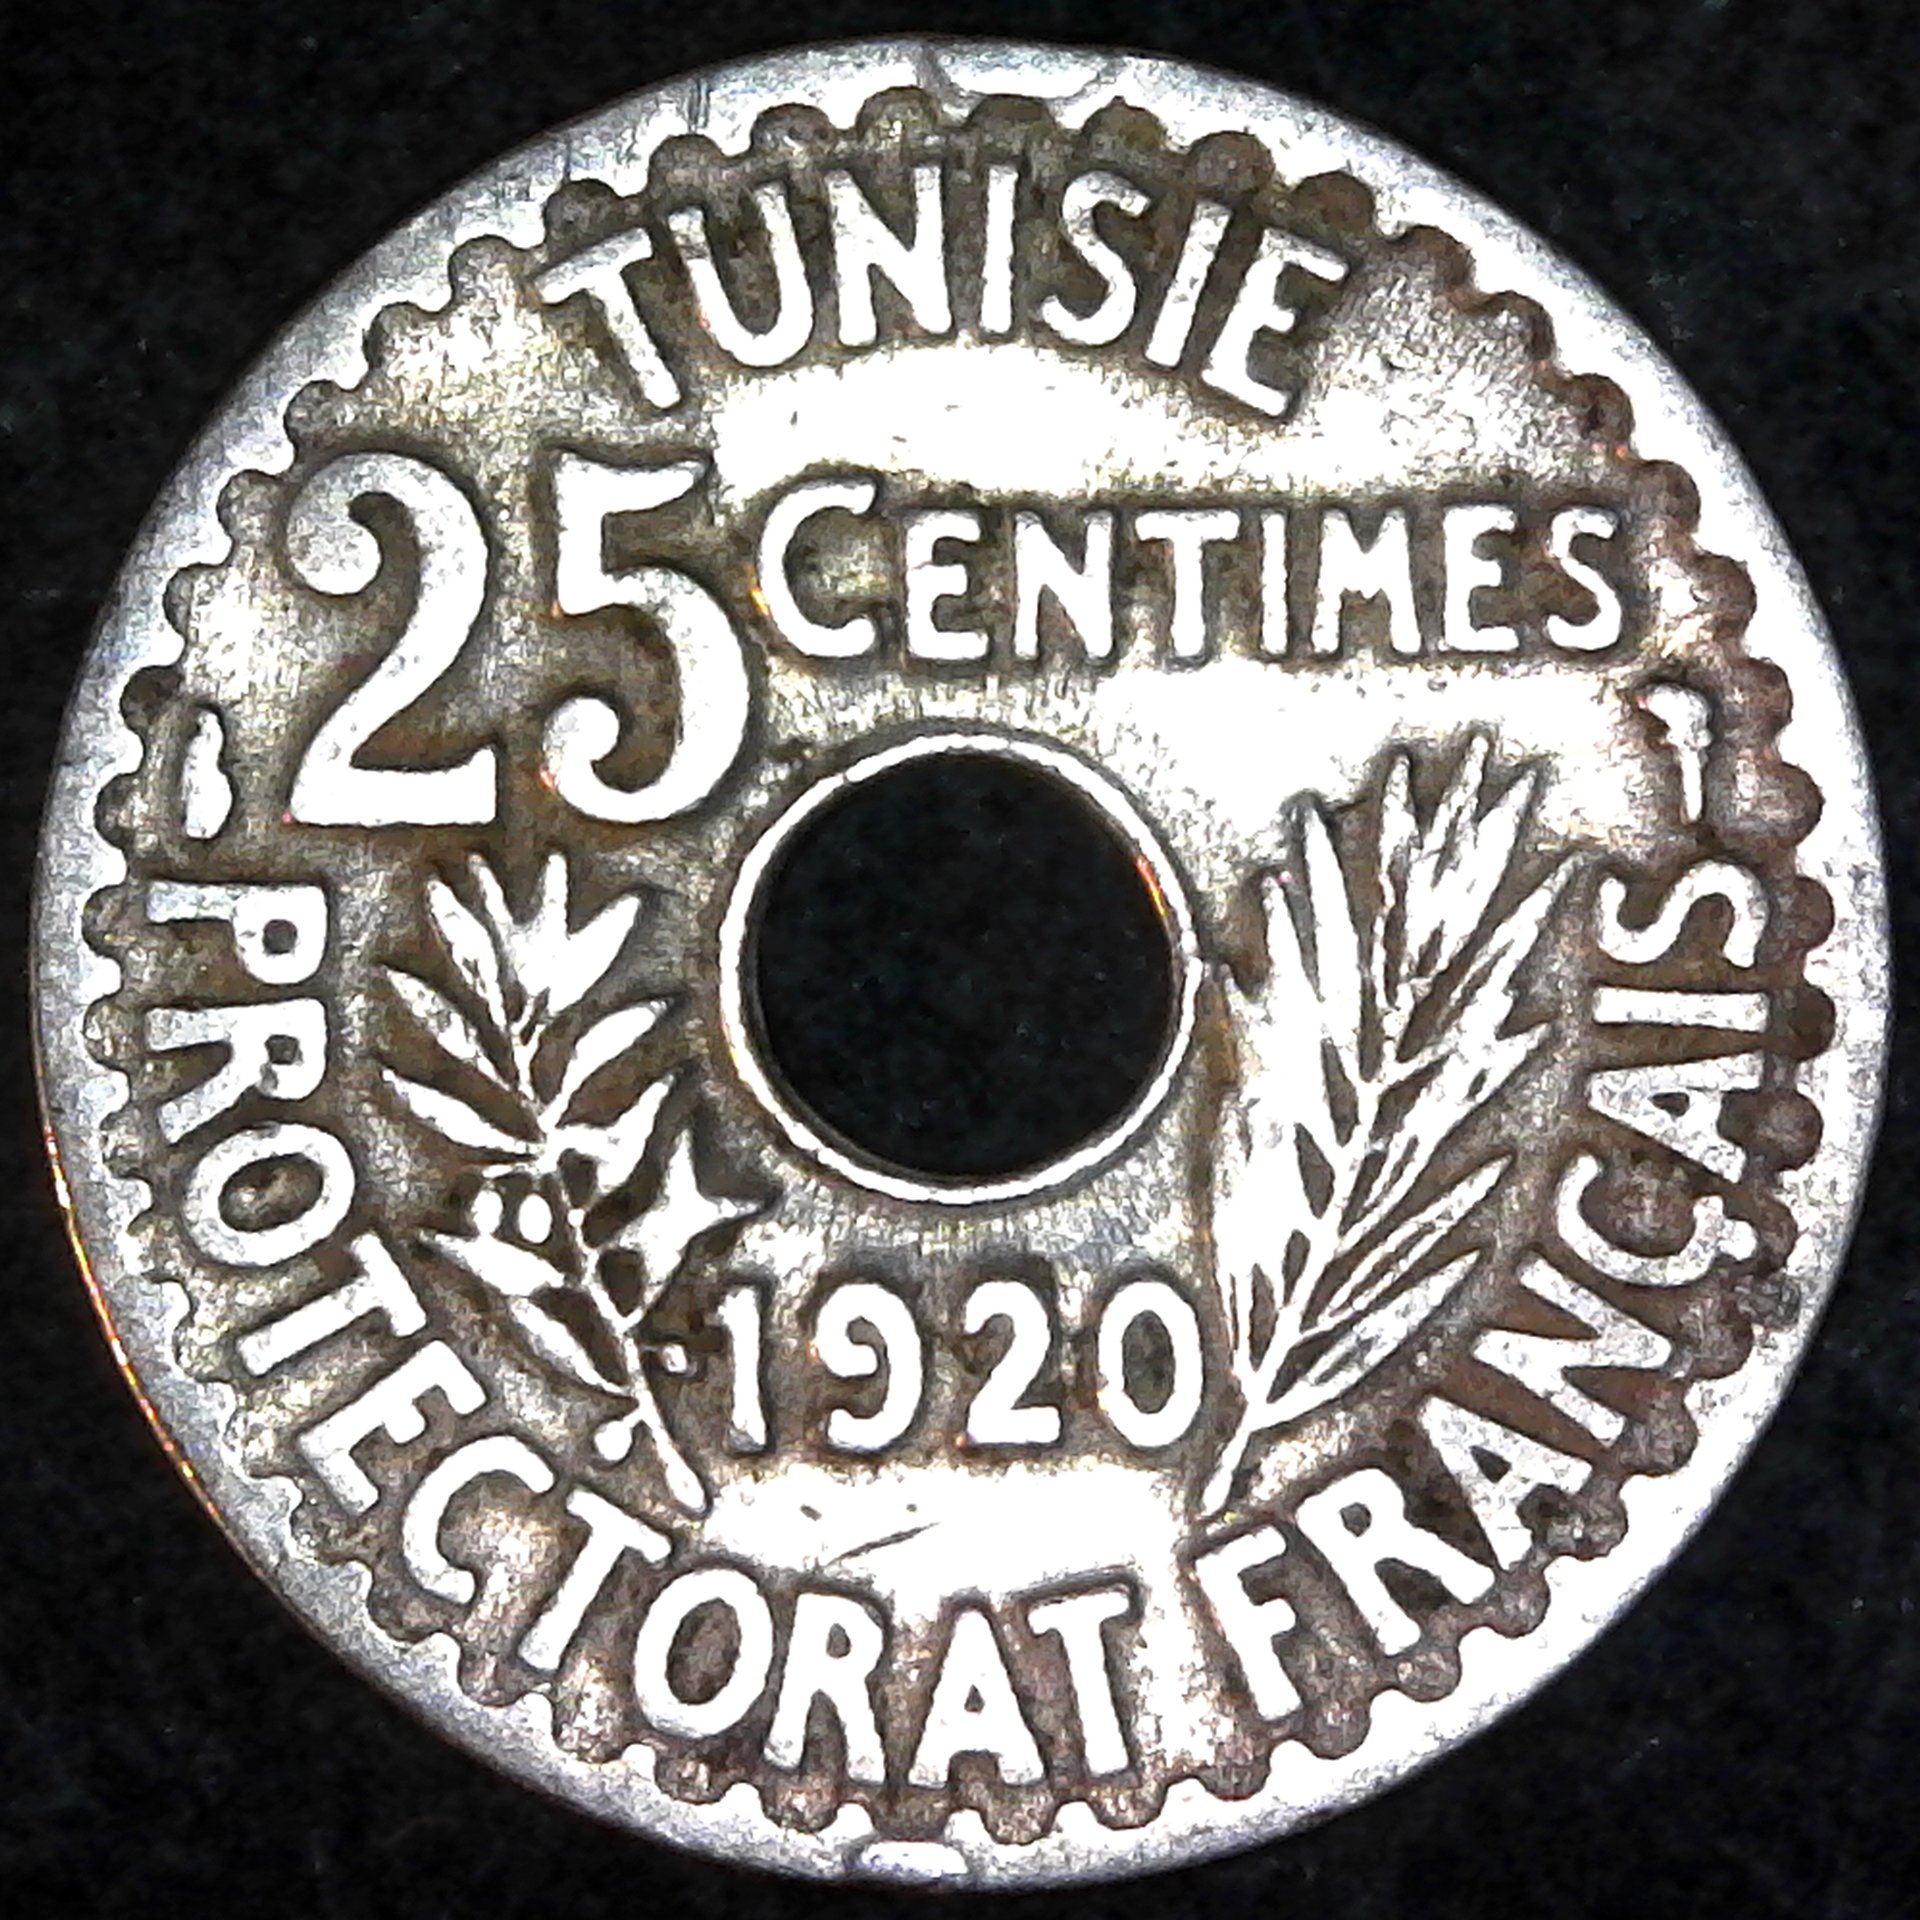 Tunisia 25 centimes 1920 obverse.jpg